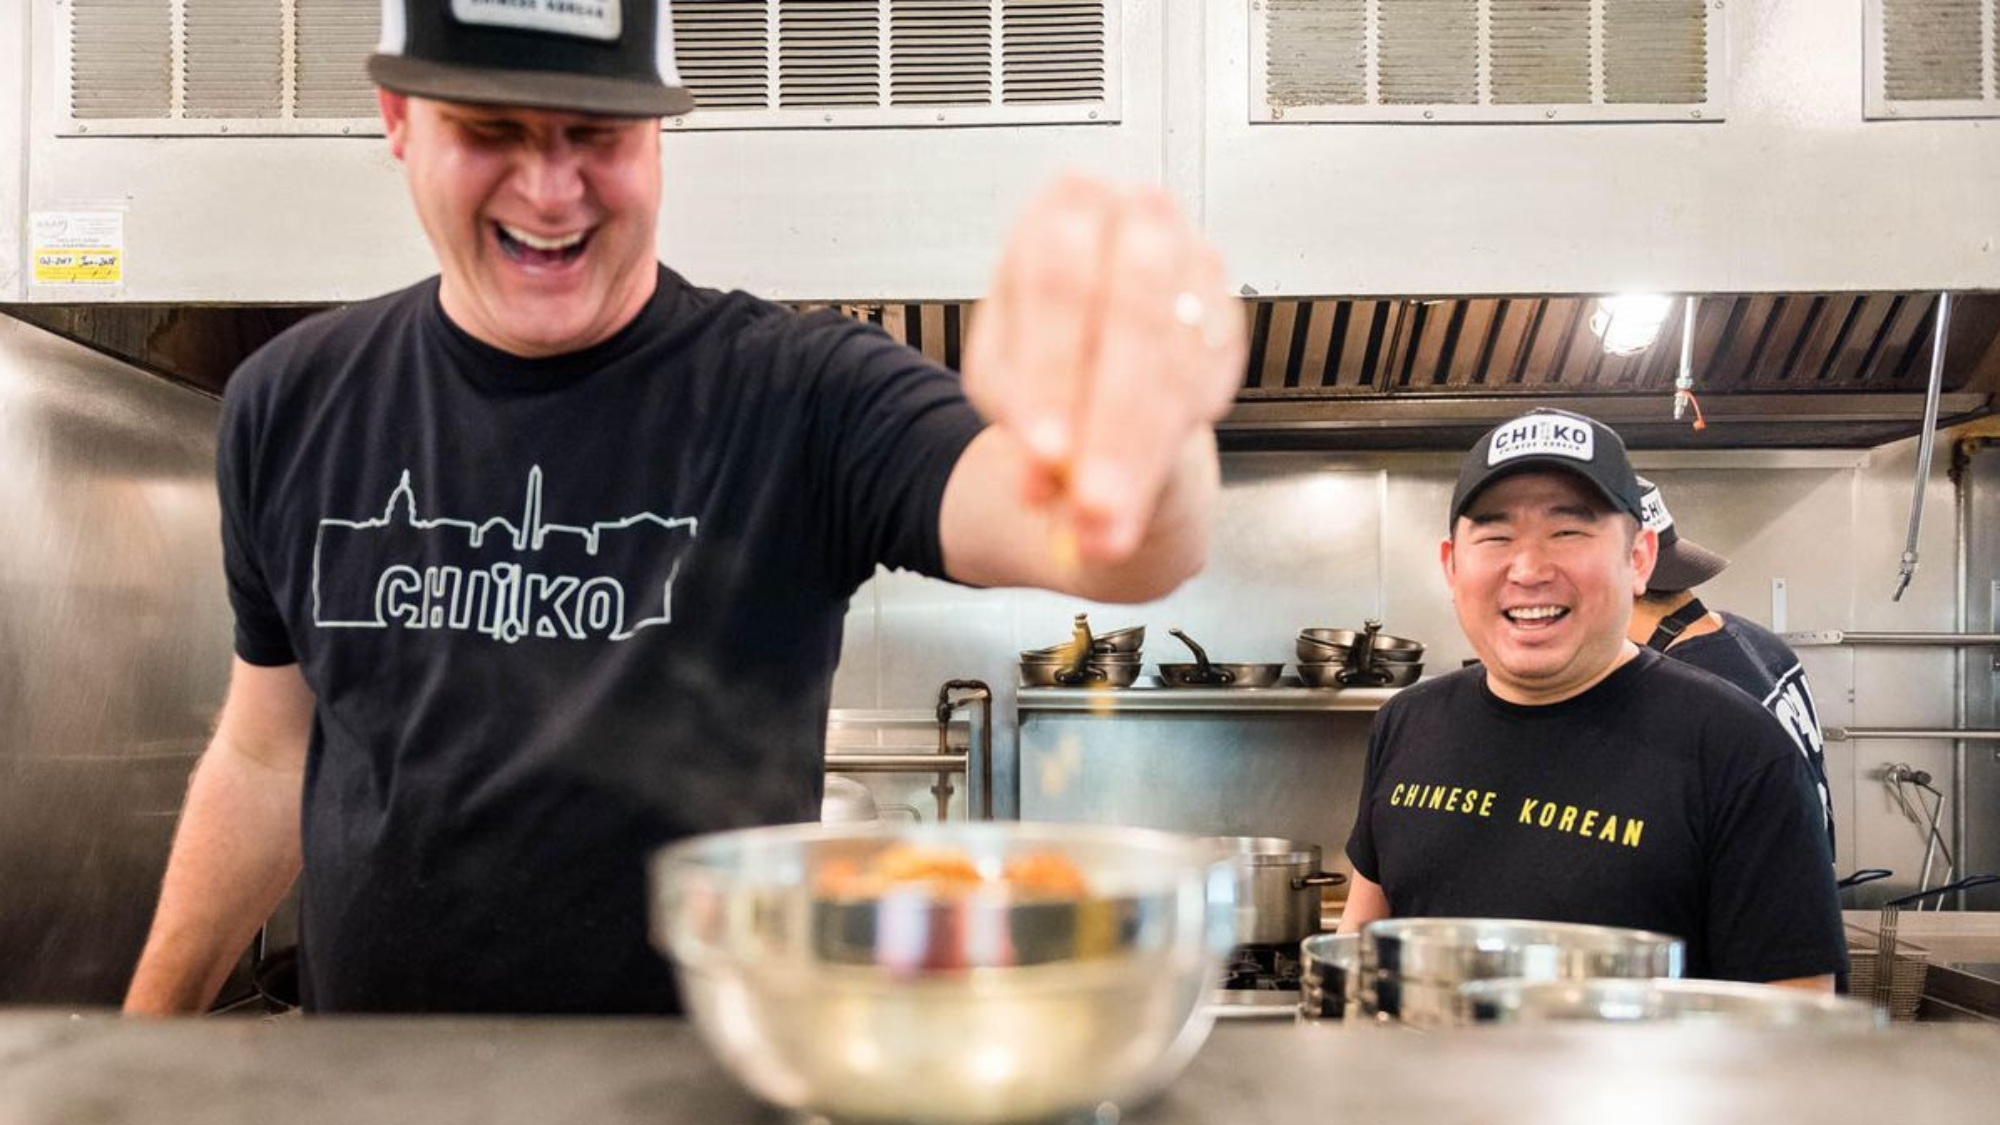 Two smiling men prep ingredients in a restaurant kitchen